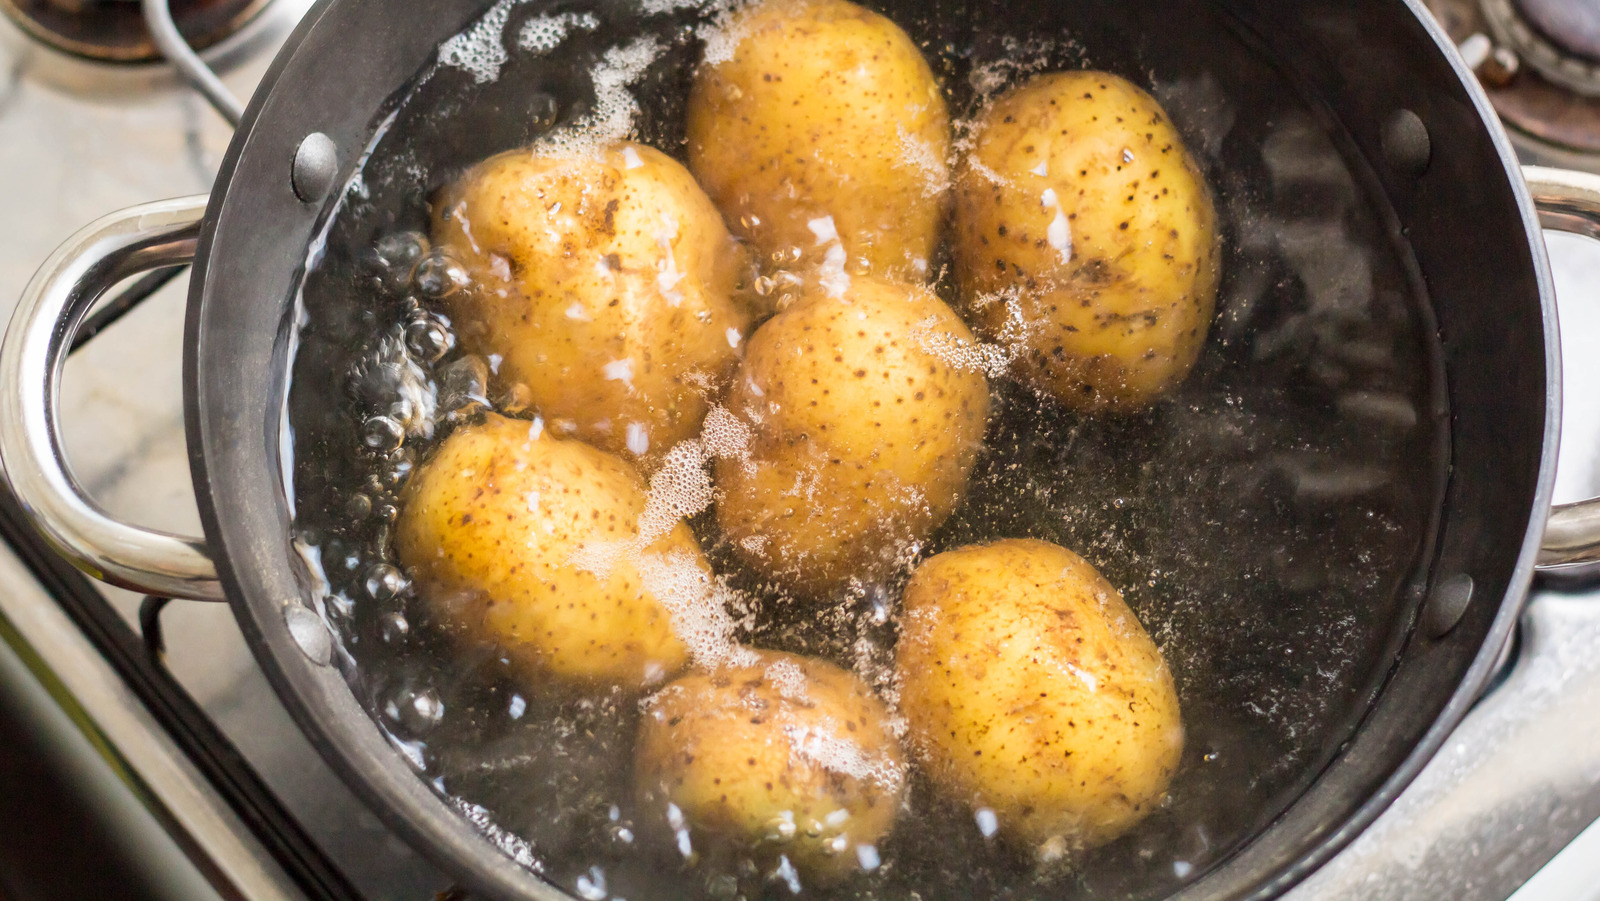 Steam potatoes or boil фото 83